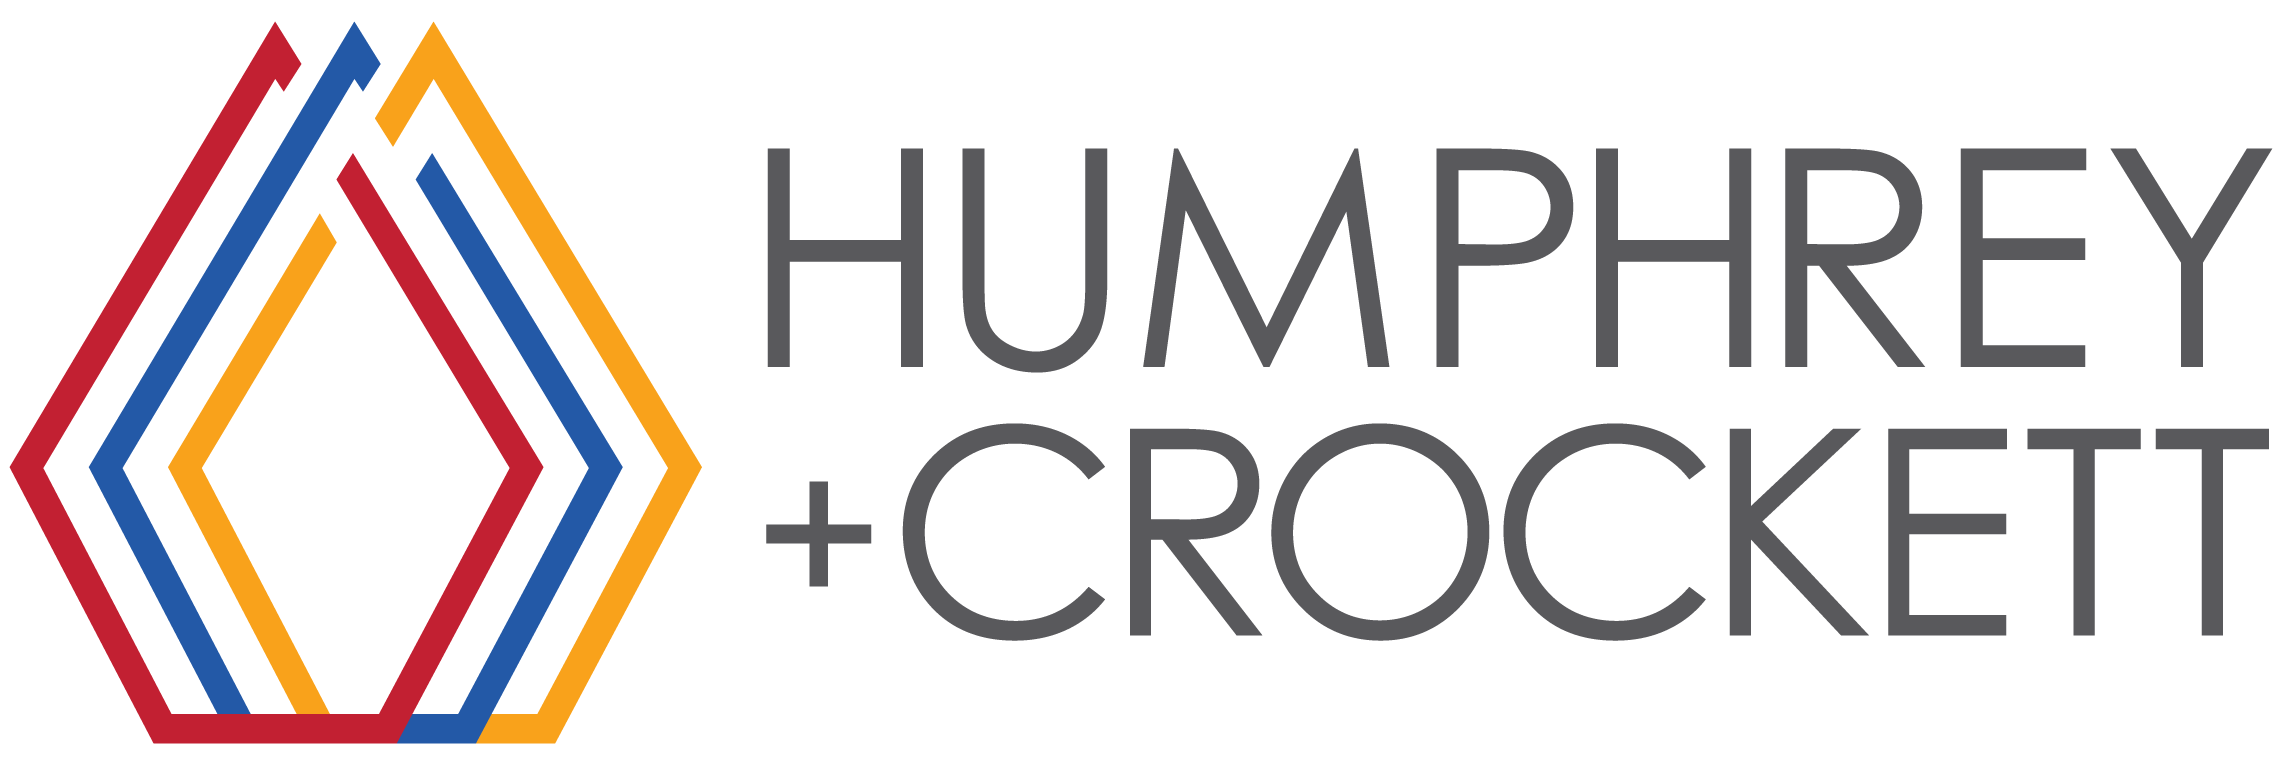 Humphrey & Crockett logo